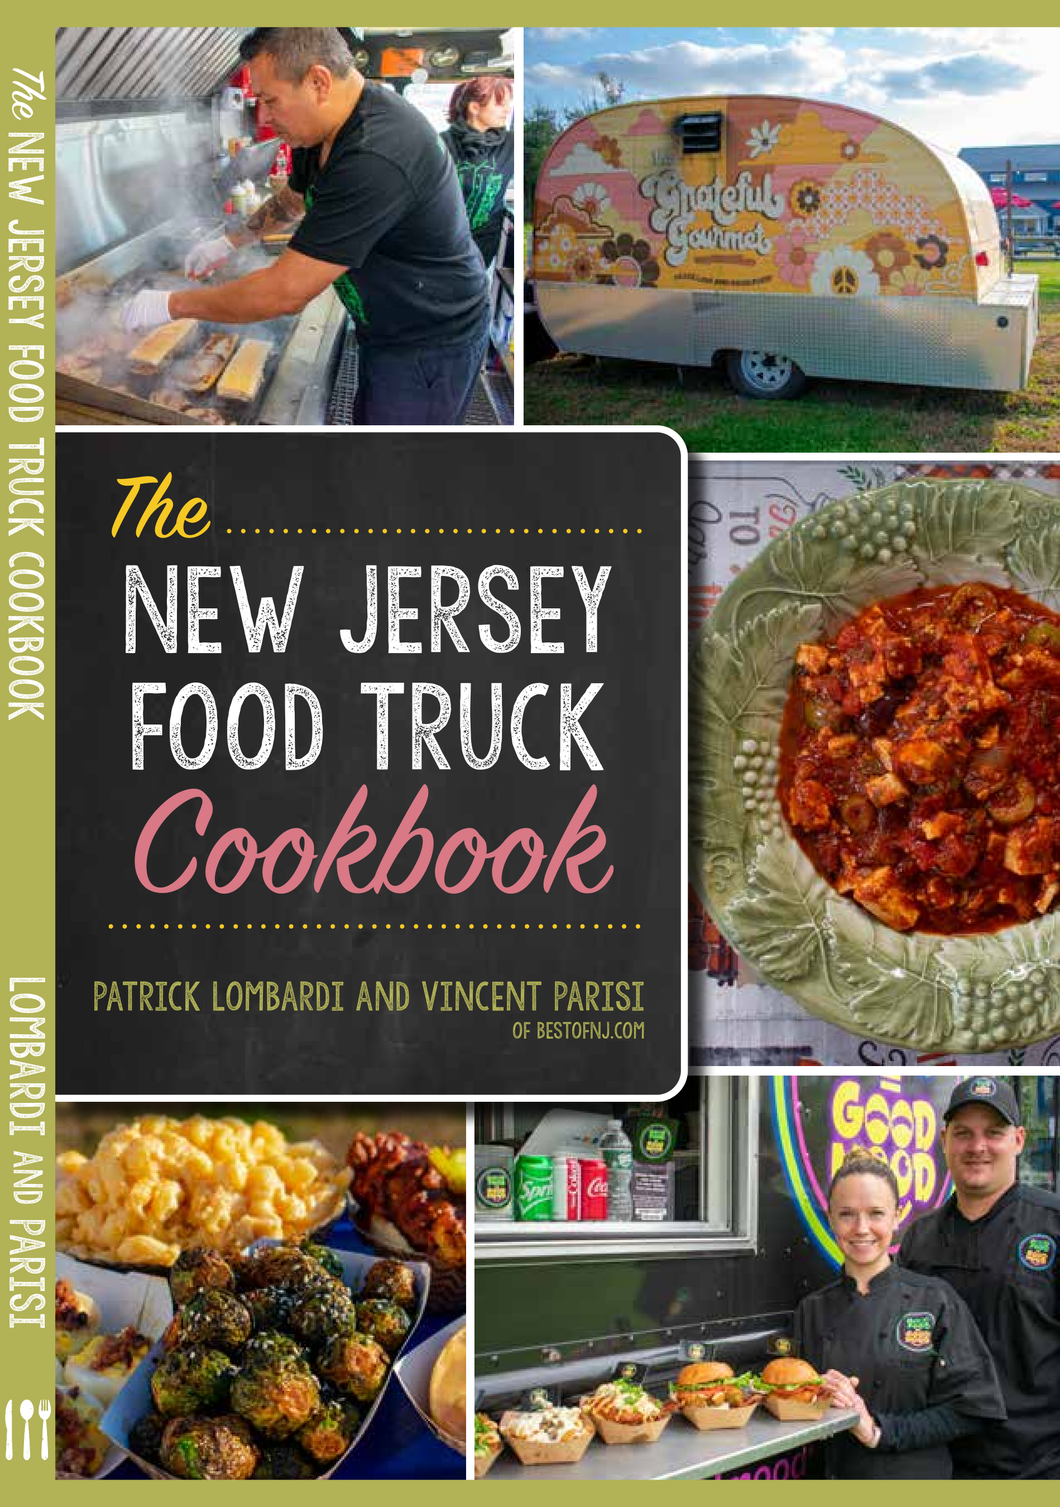 Best of NJ.com Food Truck Cookbook - Pre order your copy!